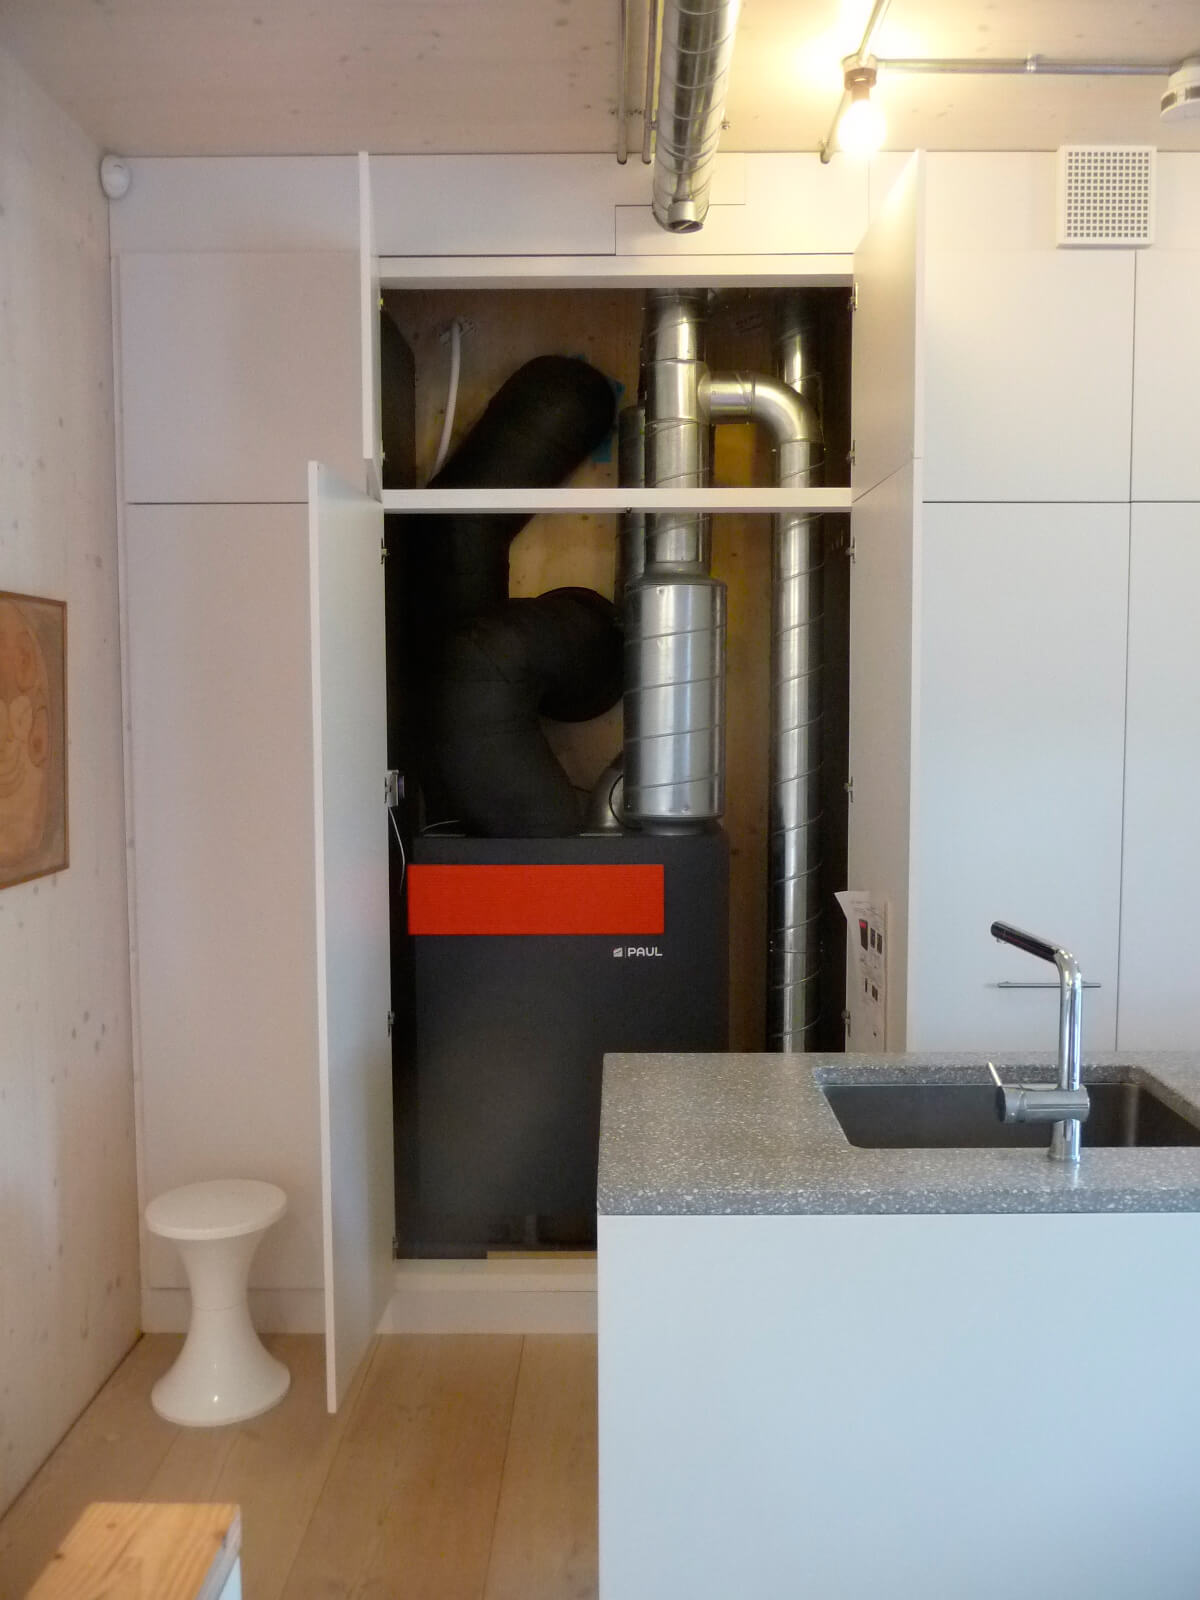 MVHR unit in a utility cupboard